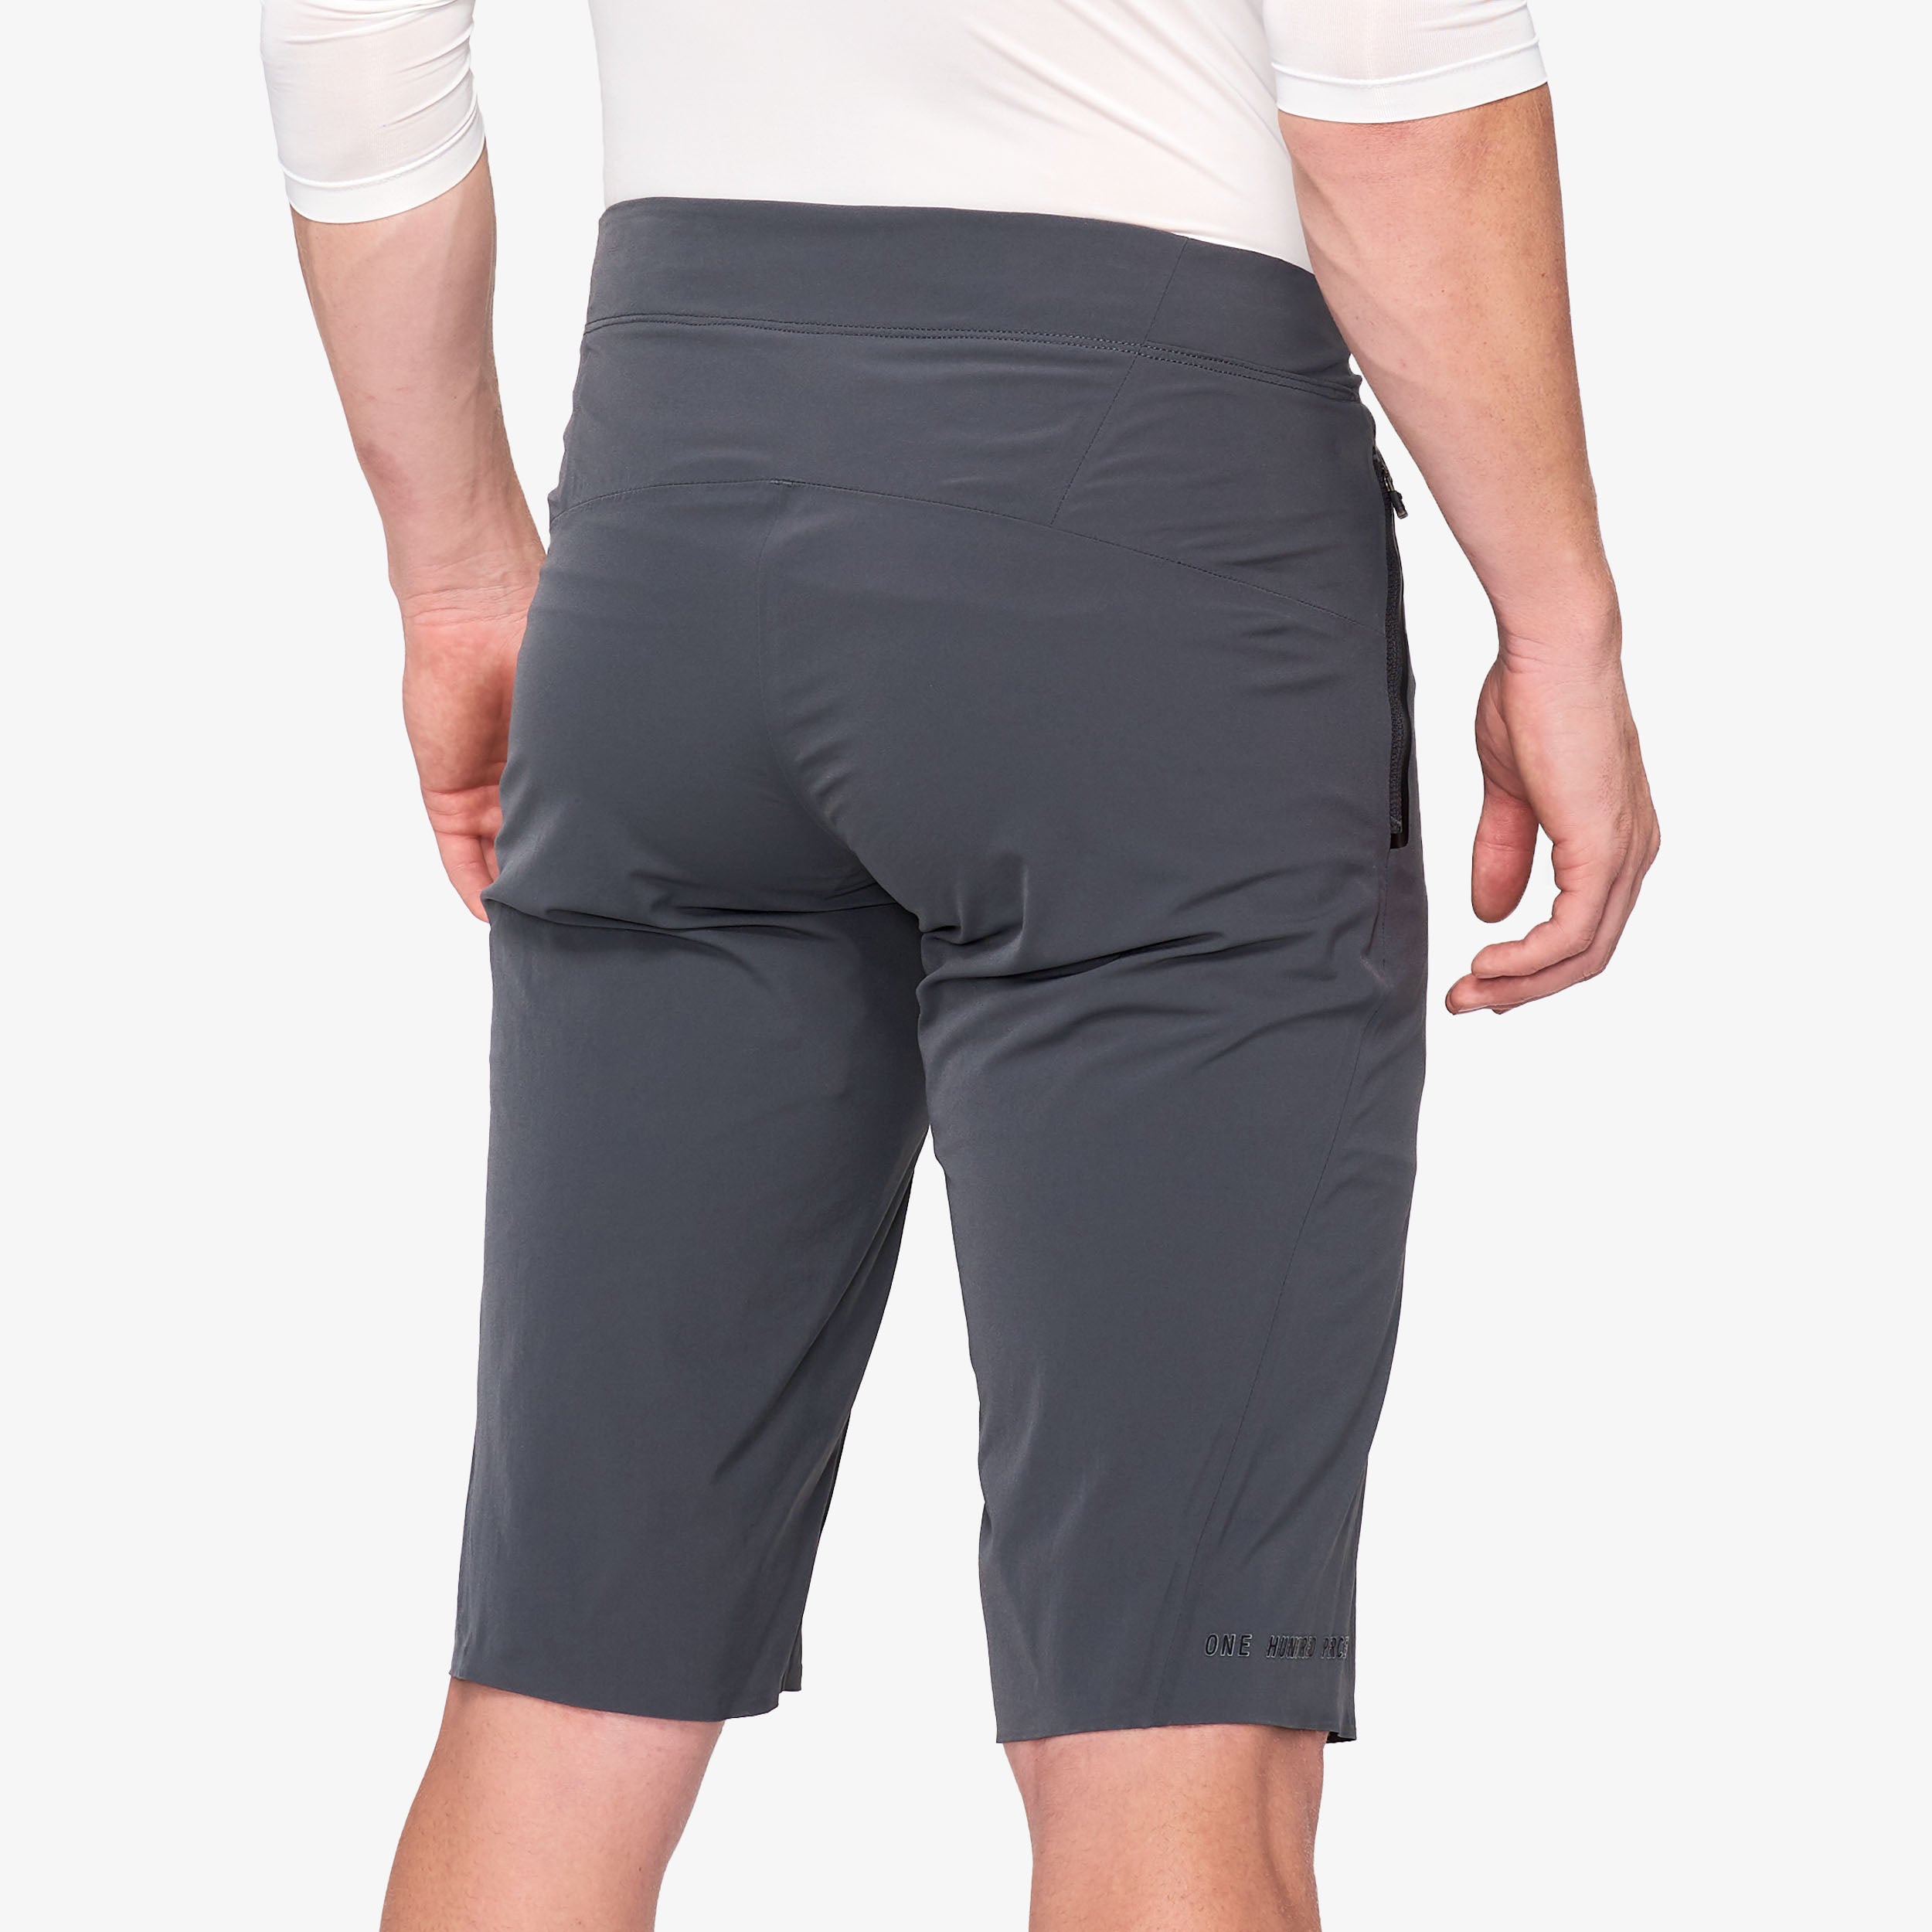 CELIUM Shorts - Charcoal - Secondary